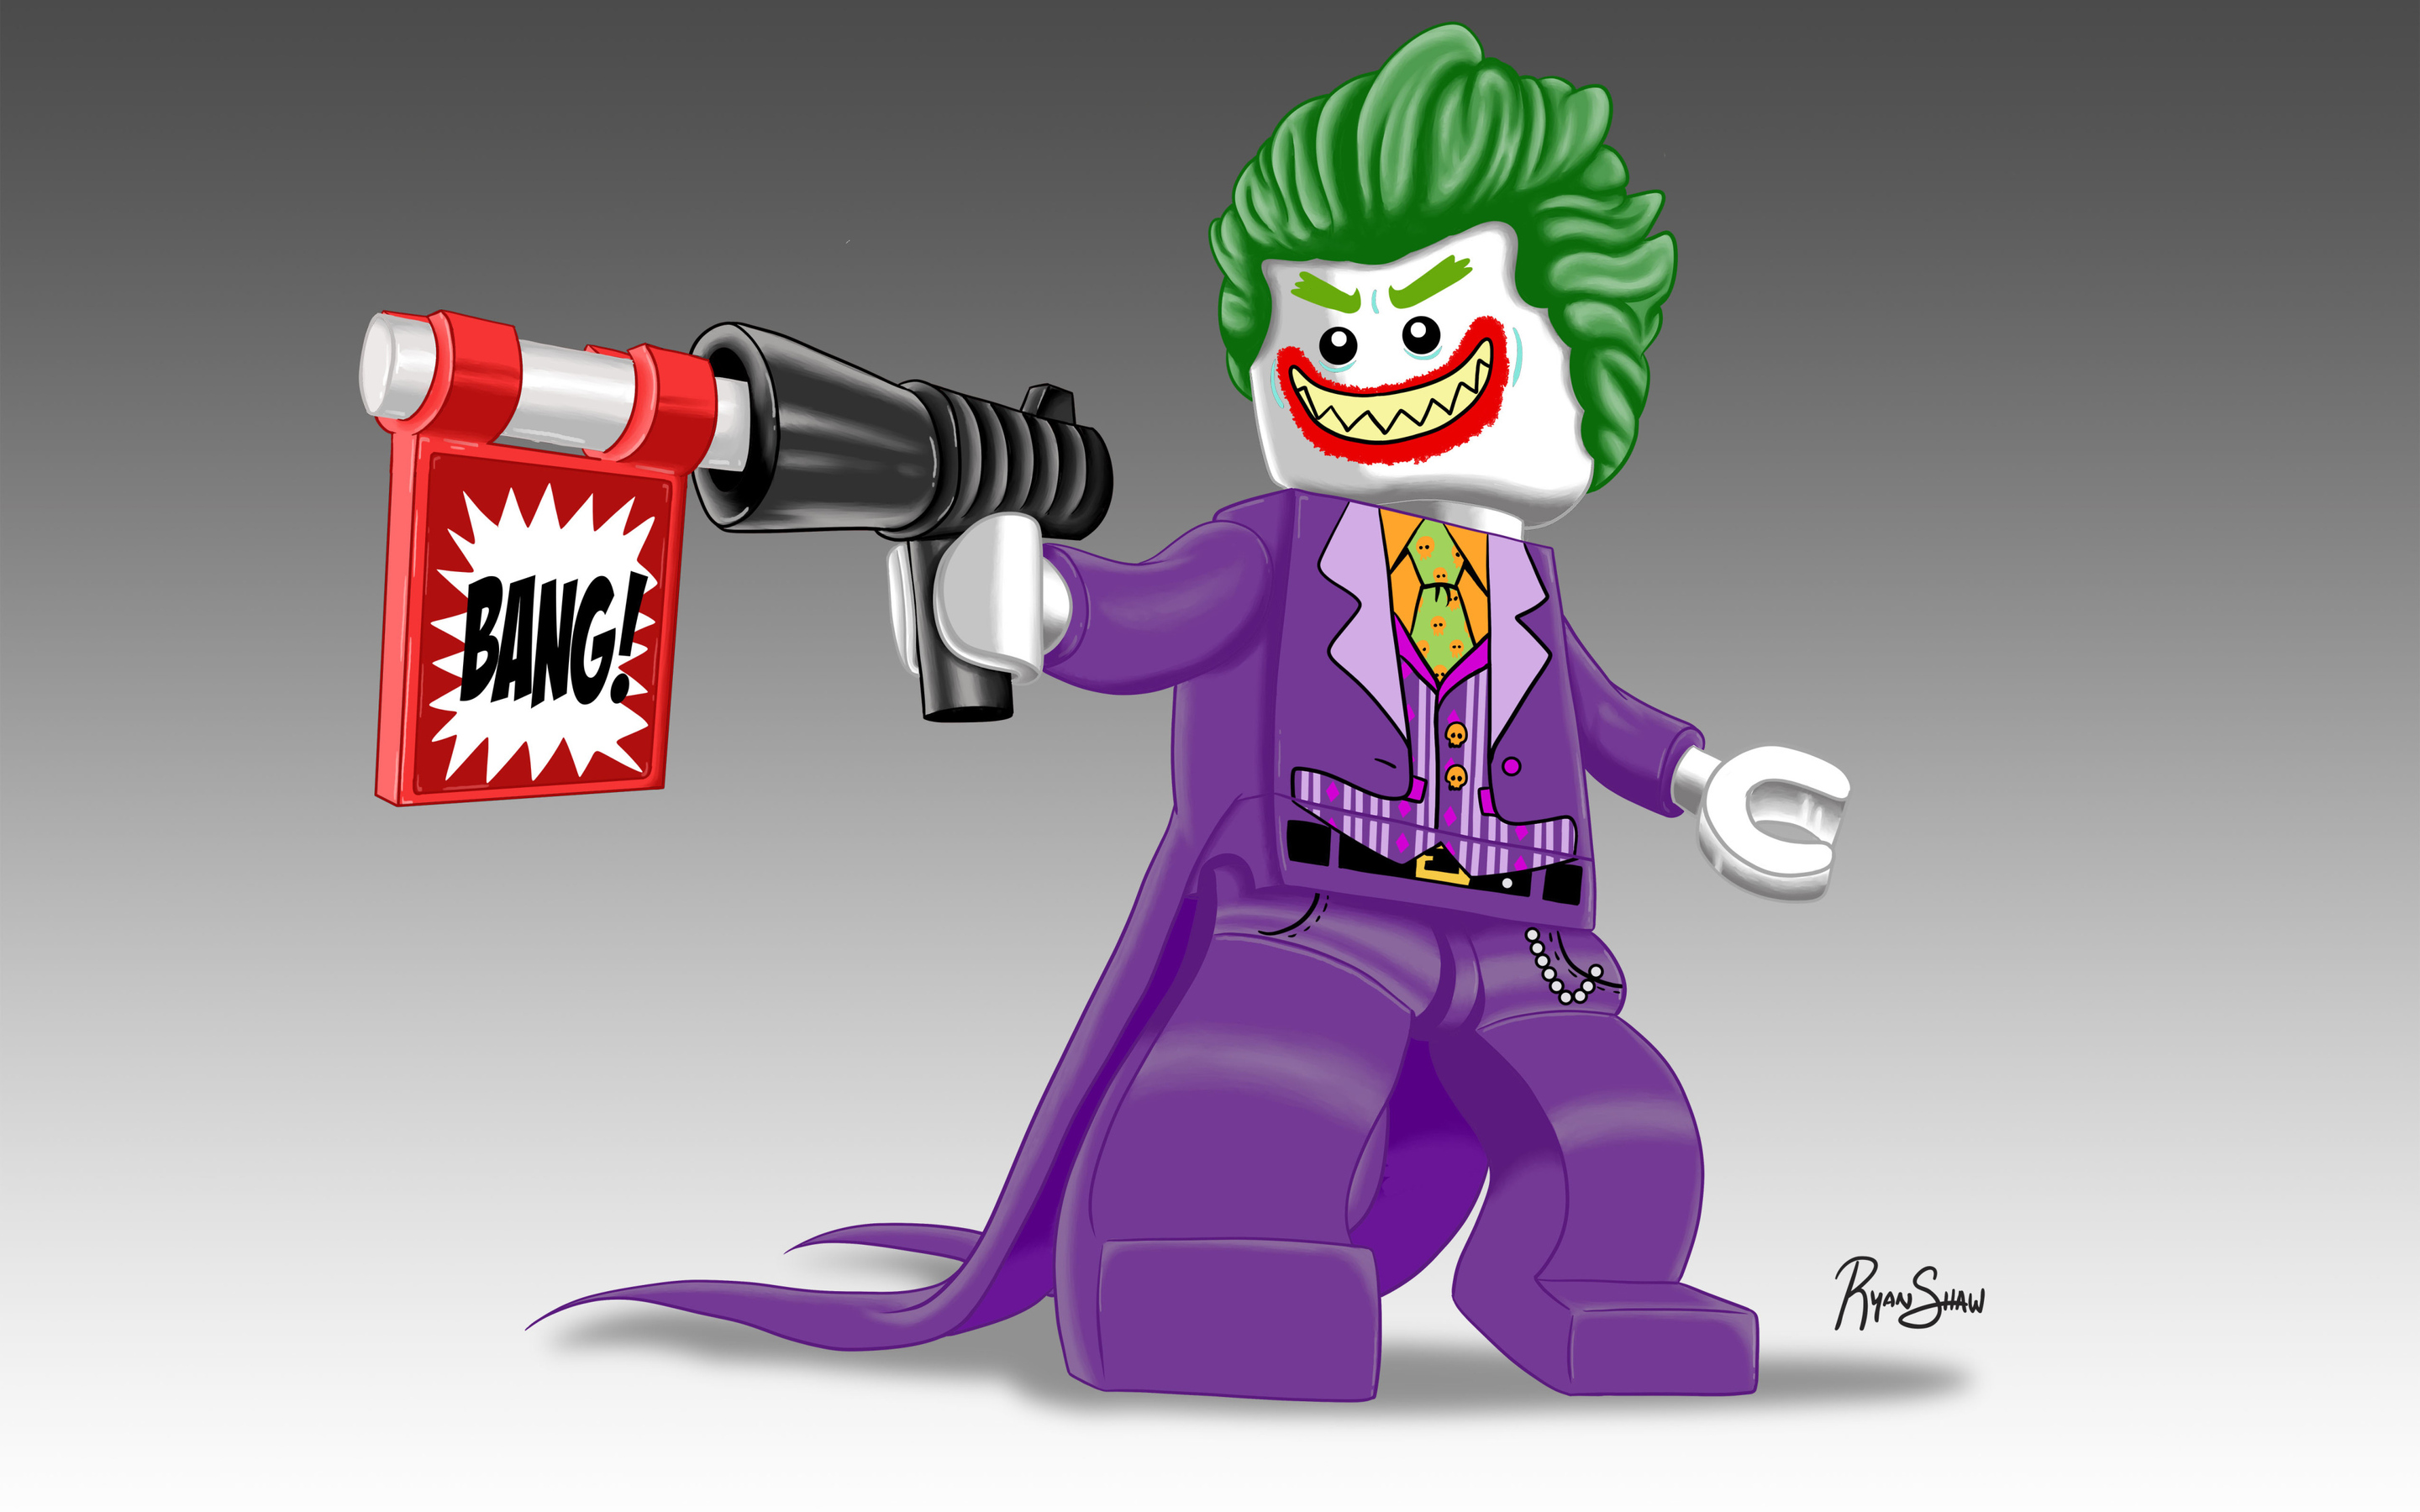 Lego Joker Dc Wallpapers